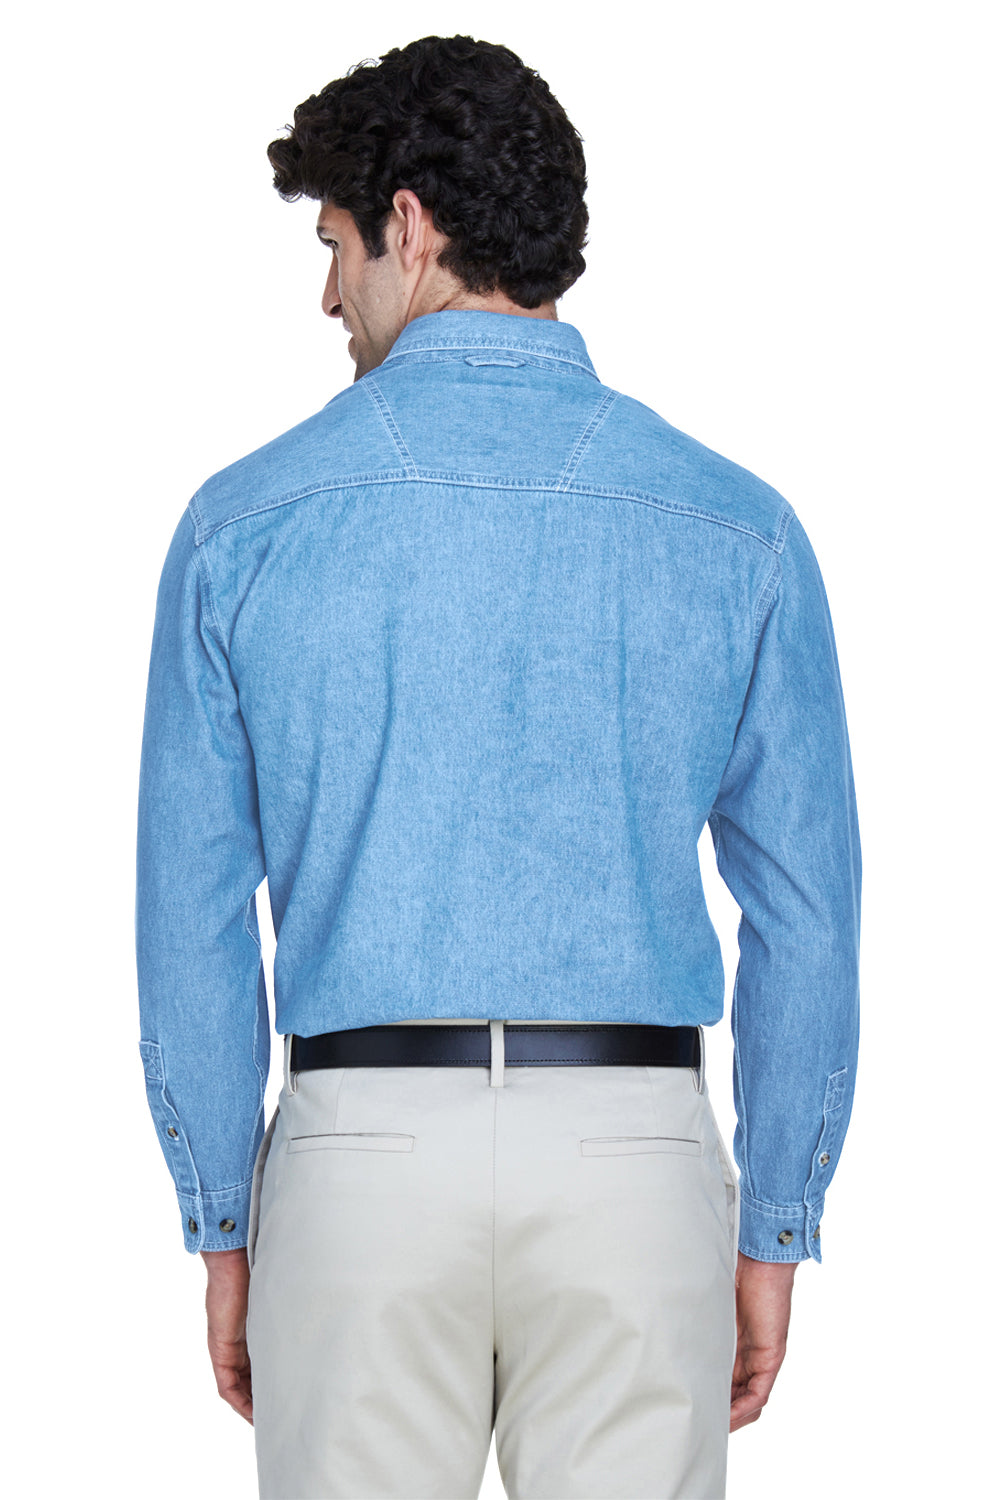 UltraClub 8960 Mens Cypress Denim Long Sleeve Button Down Shirt w/ Pocket Light Blue Back